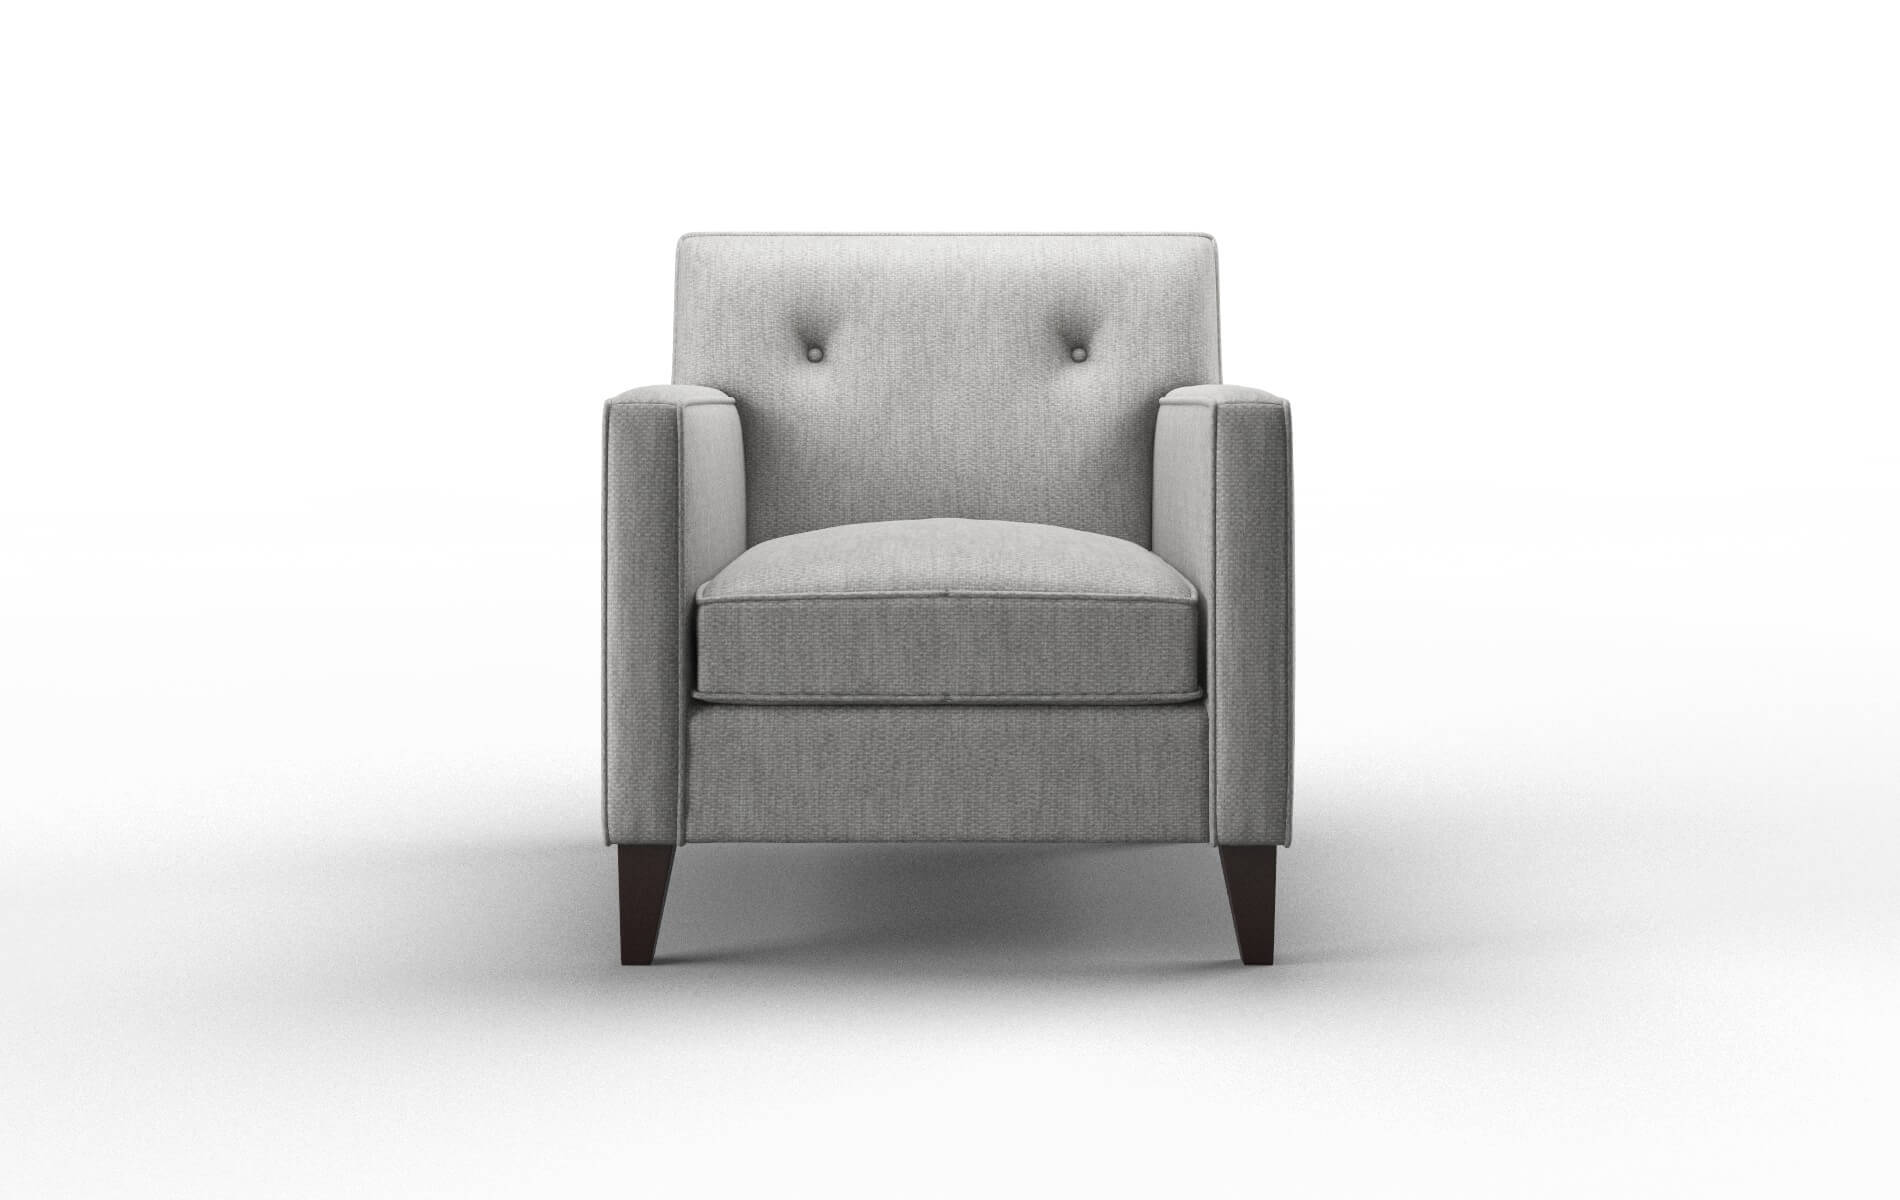 Harper Bungalow Graphite chair espresso legs